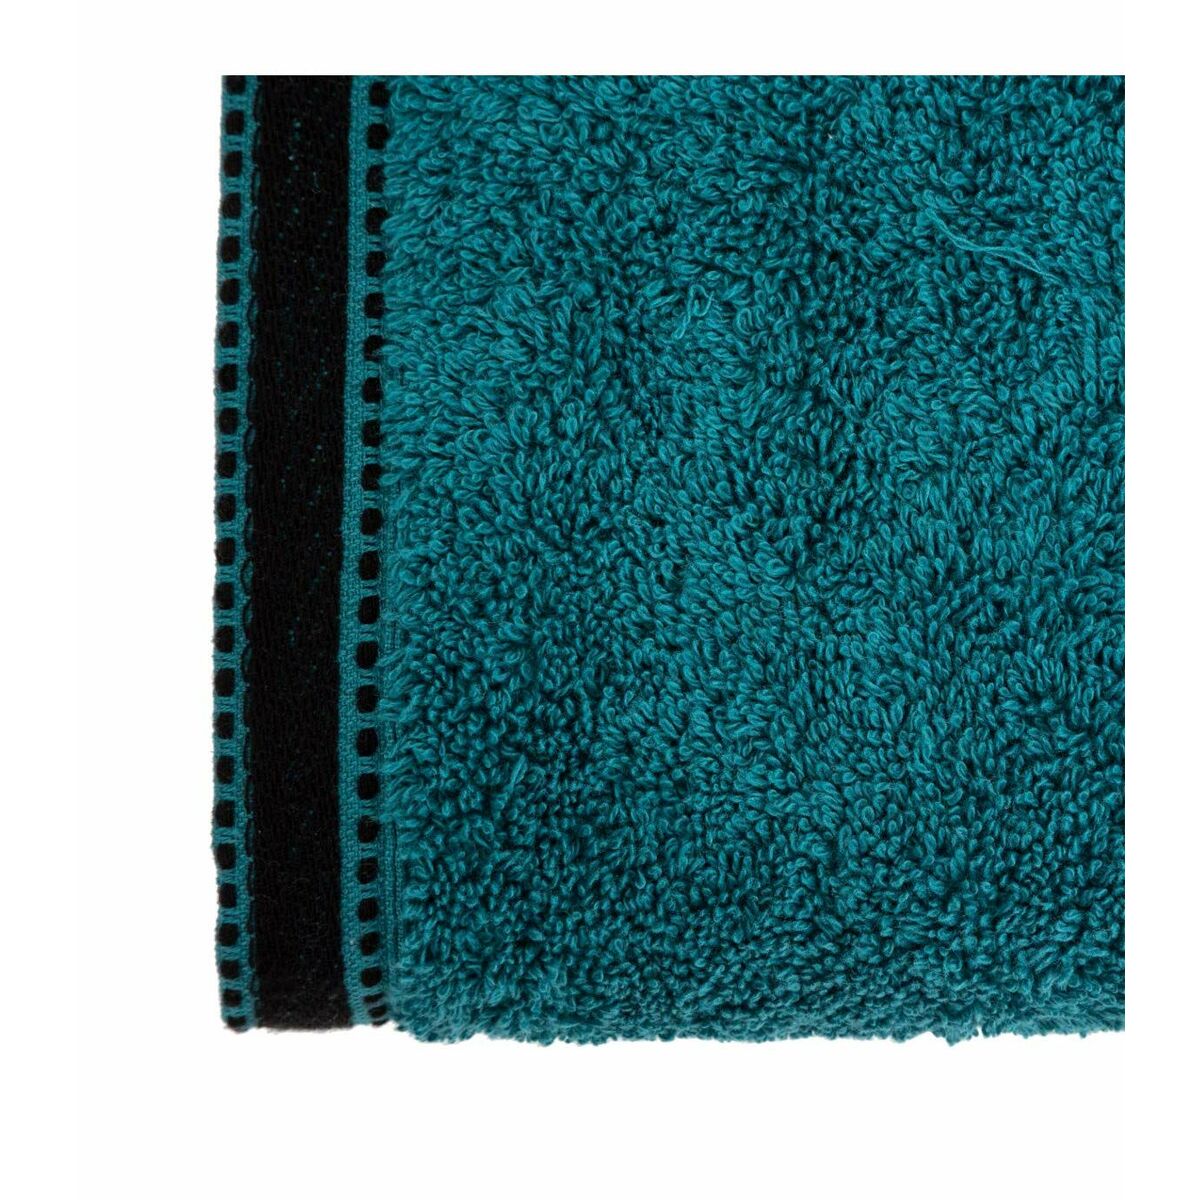 Bath towel 5five Premium Cotton Green 550 g (70 x 130 cm)